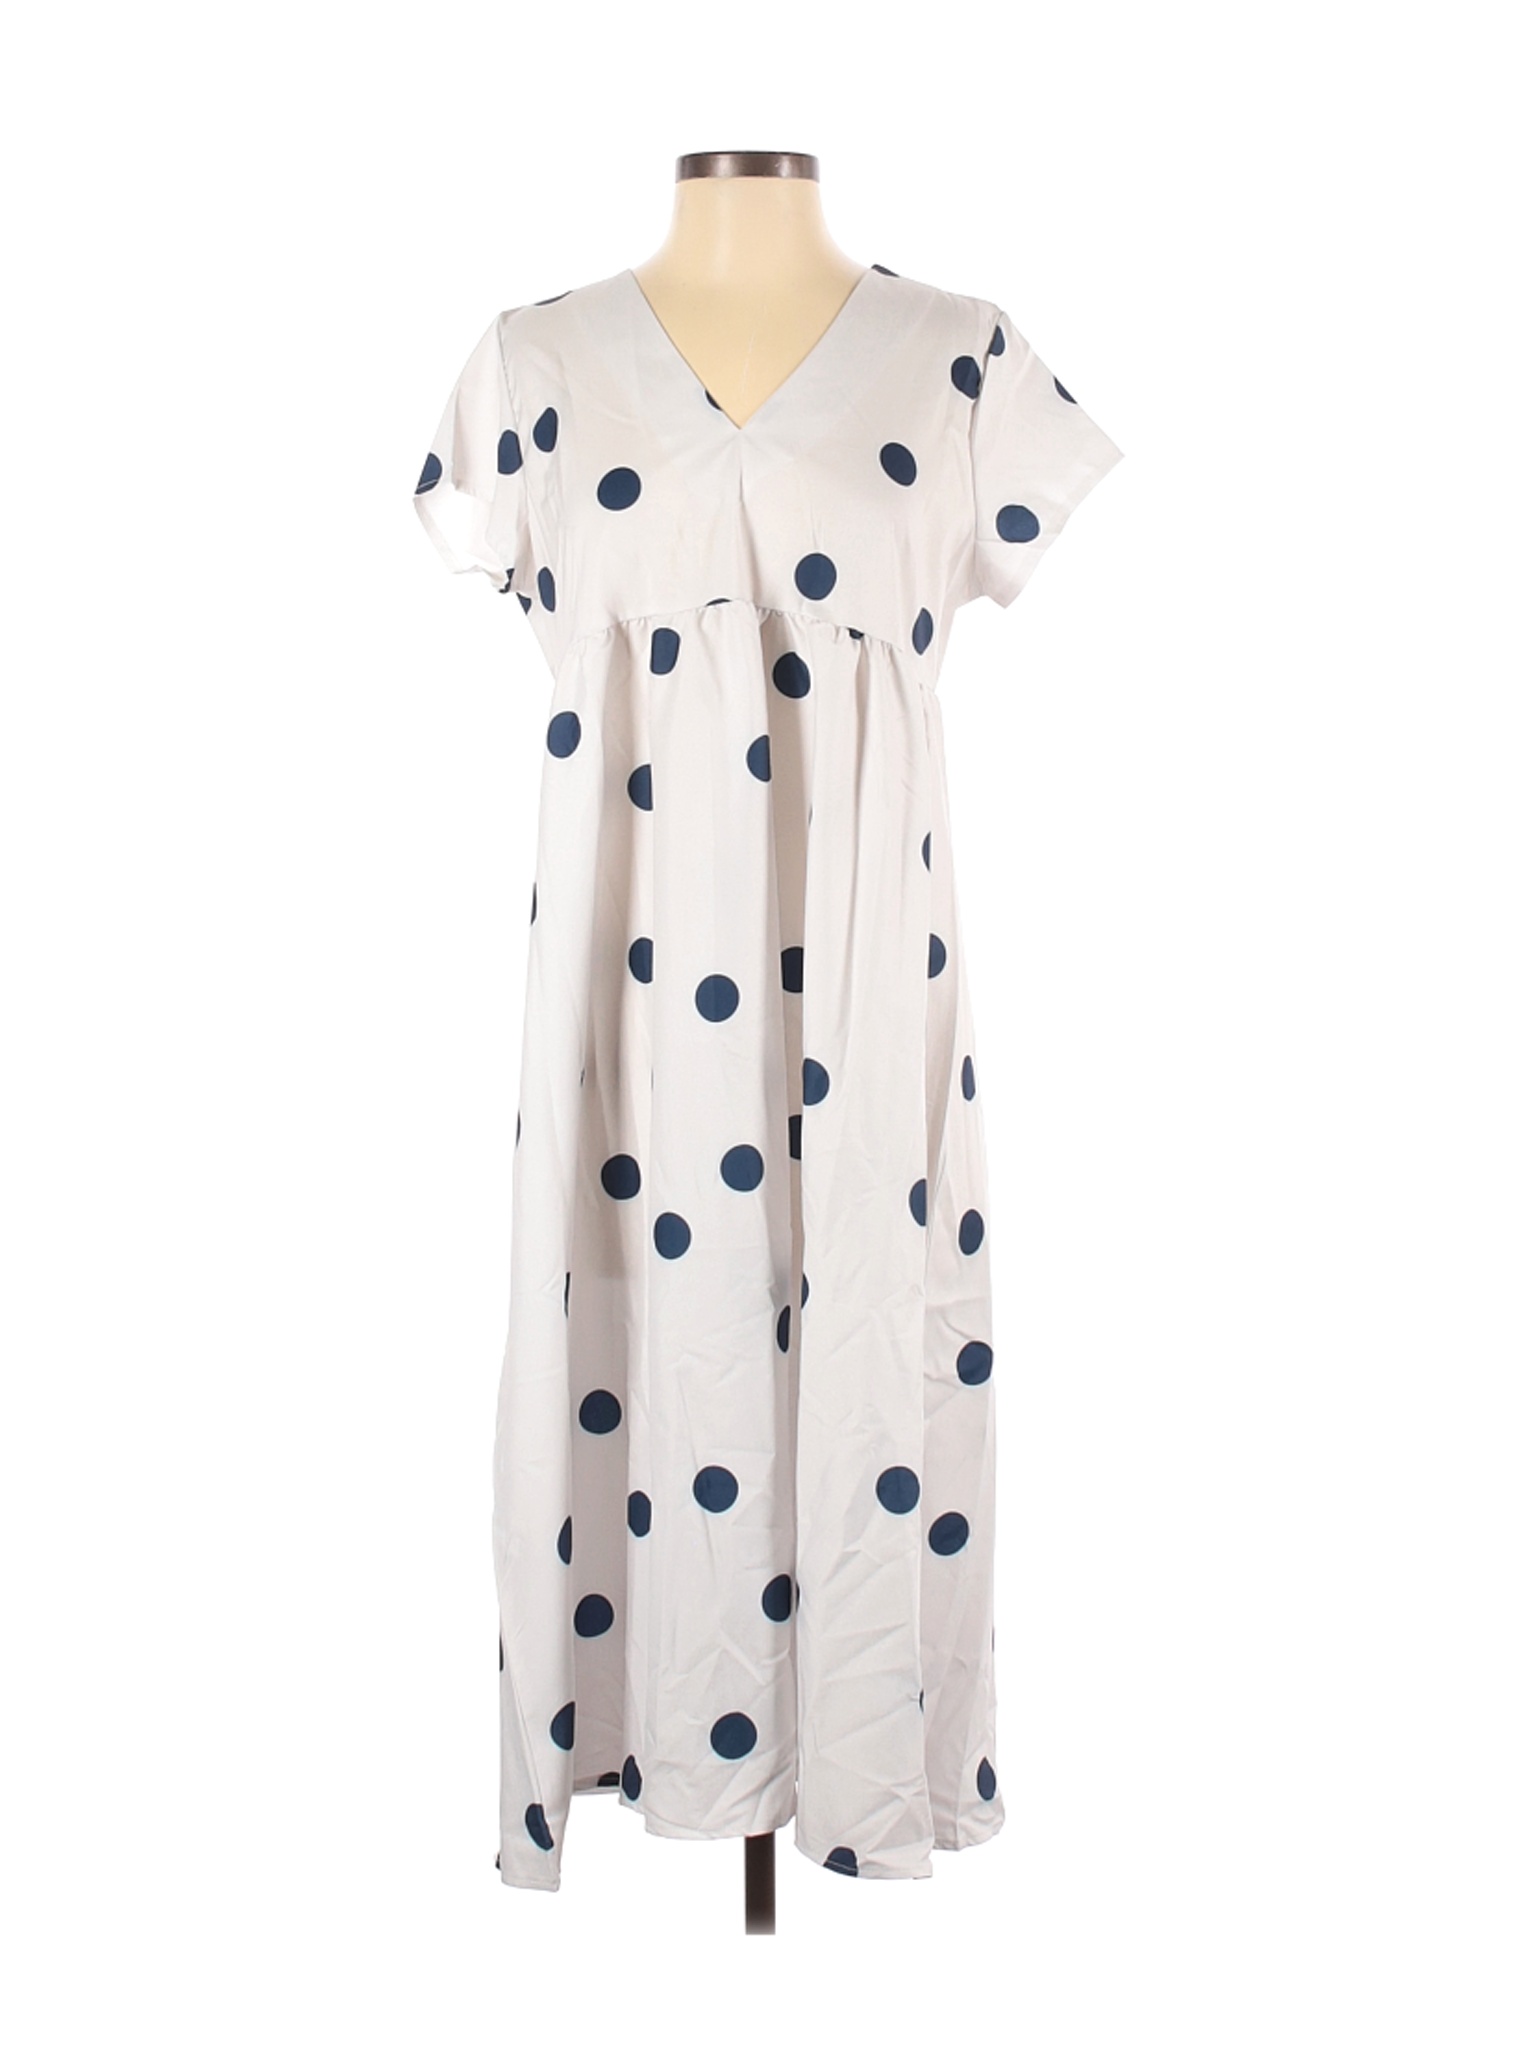 H&M Women White Casual Dress S | eBay